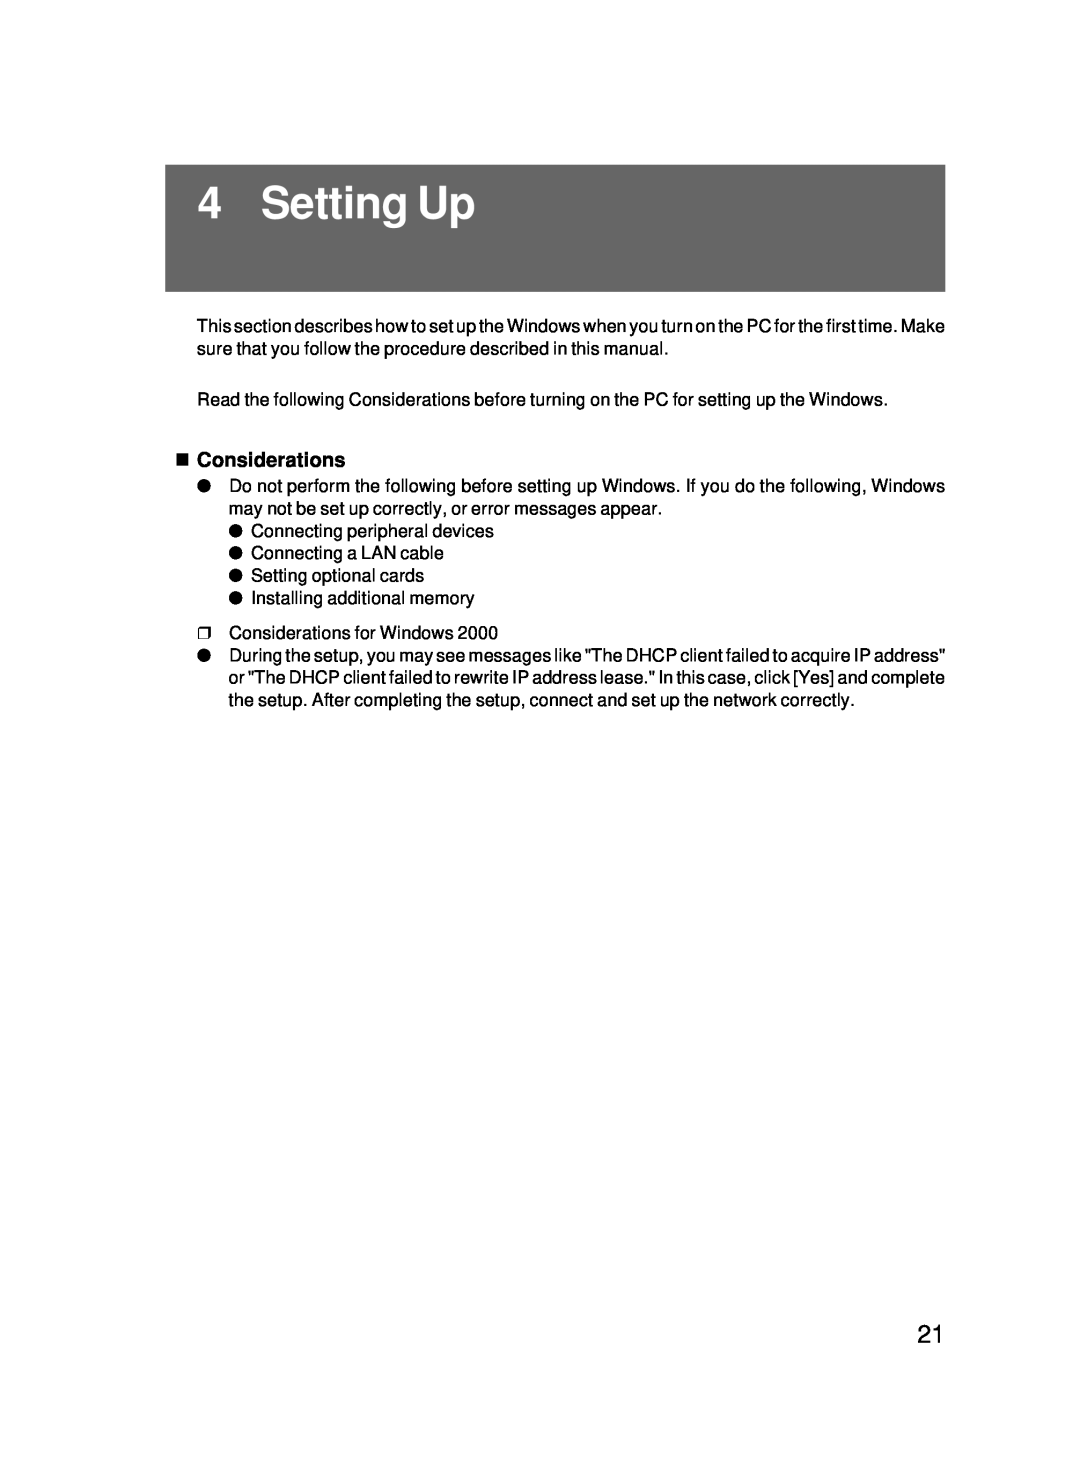 Fujitsu 5000 user manual Setting Up, Considerations 